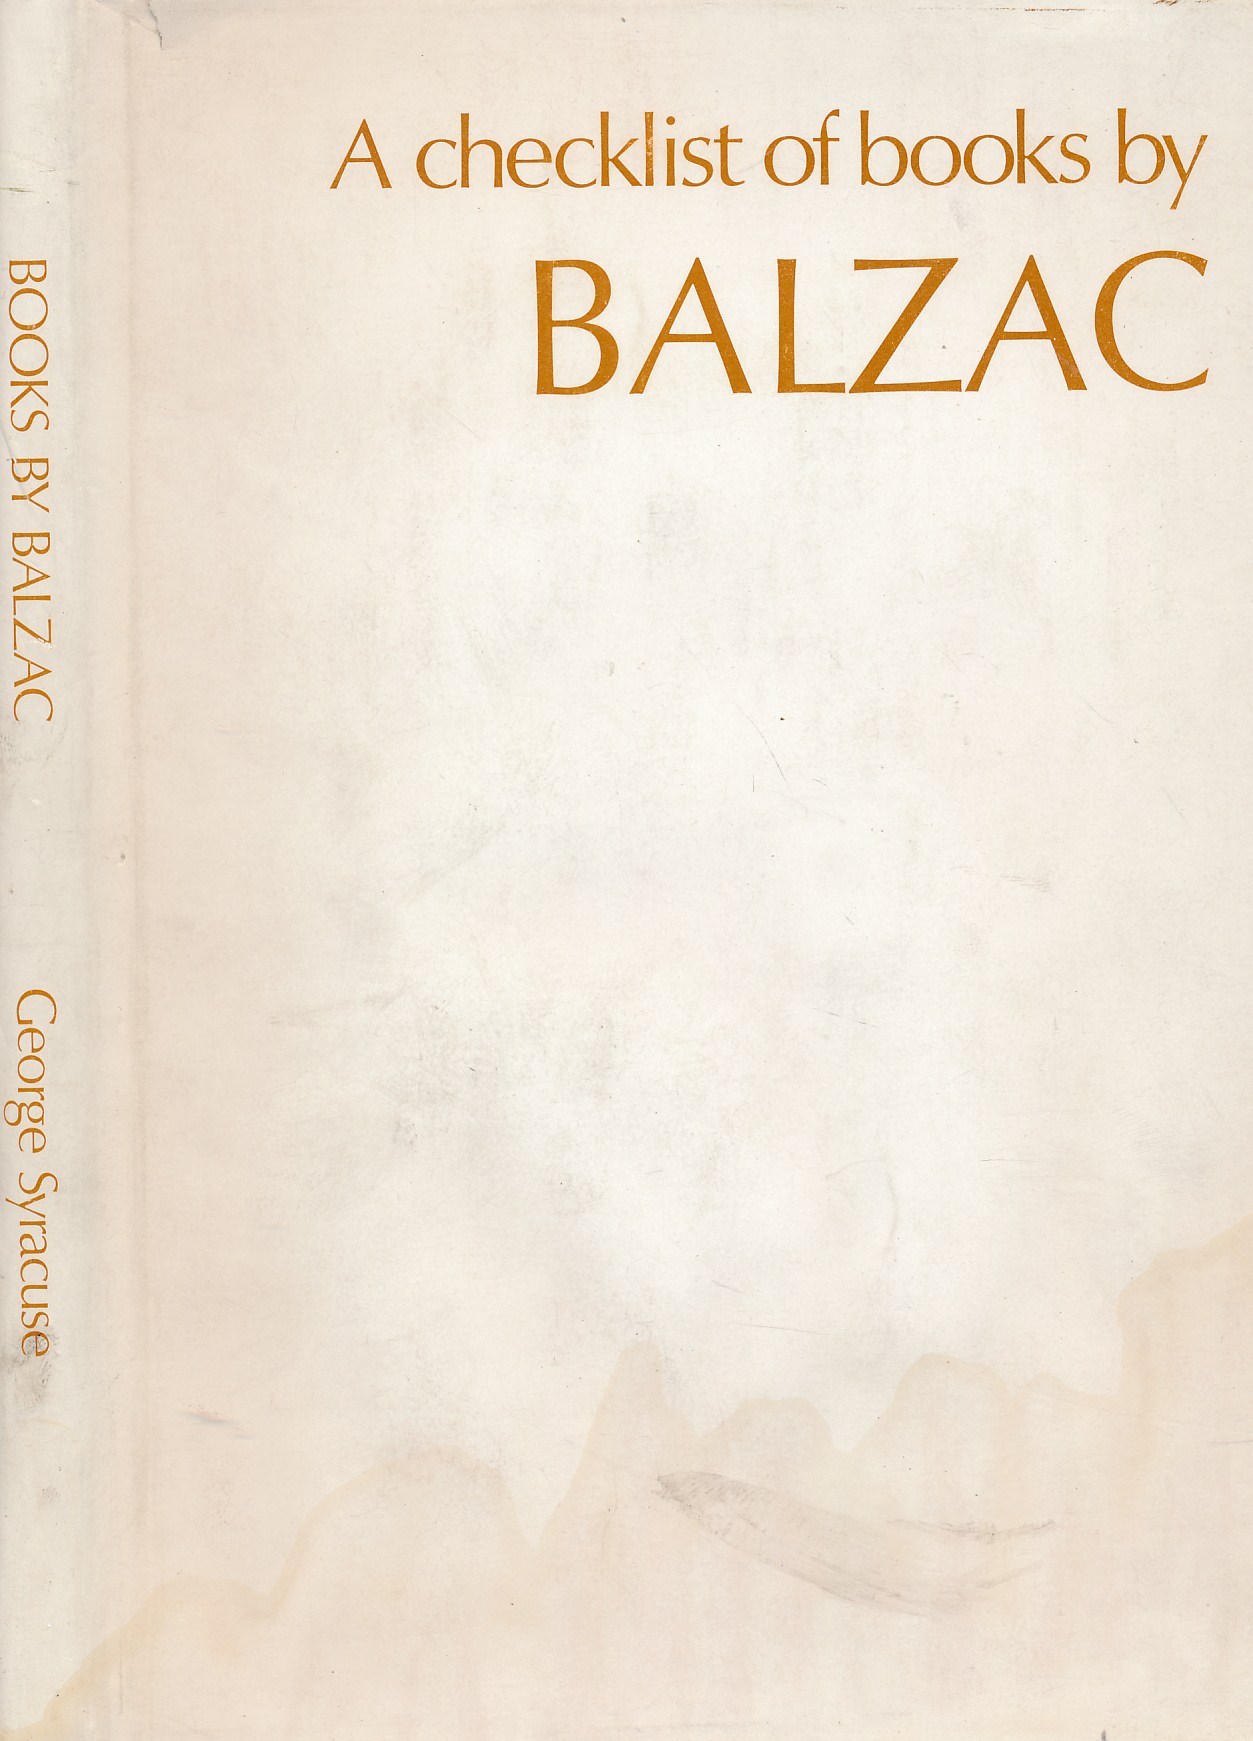 Books by Balzac